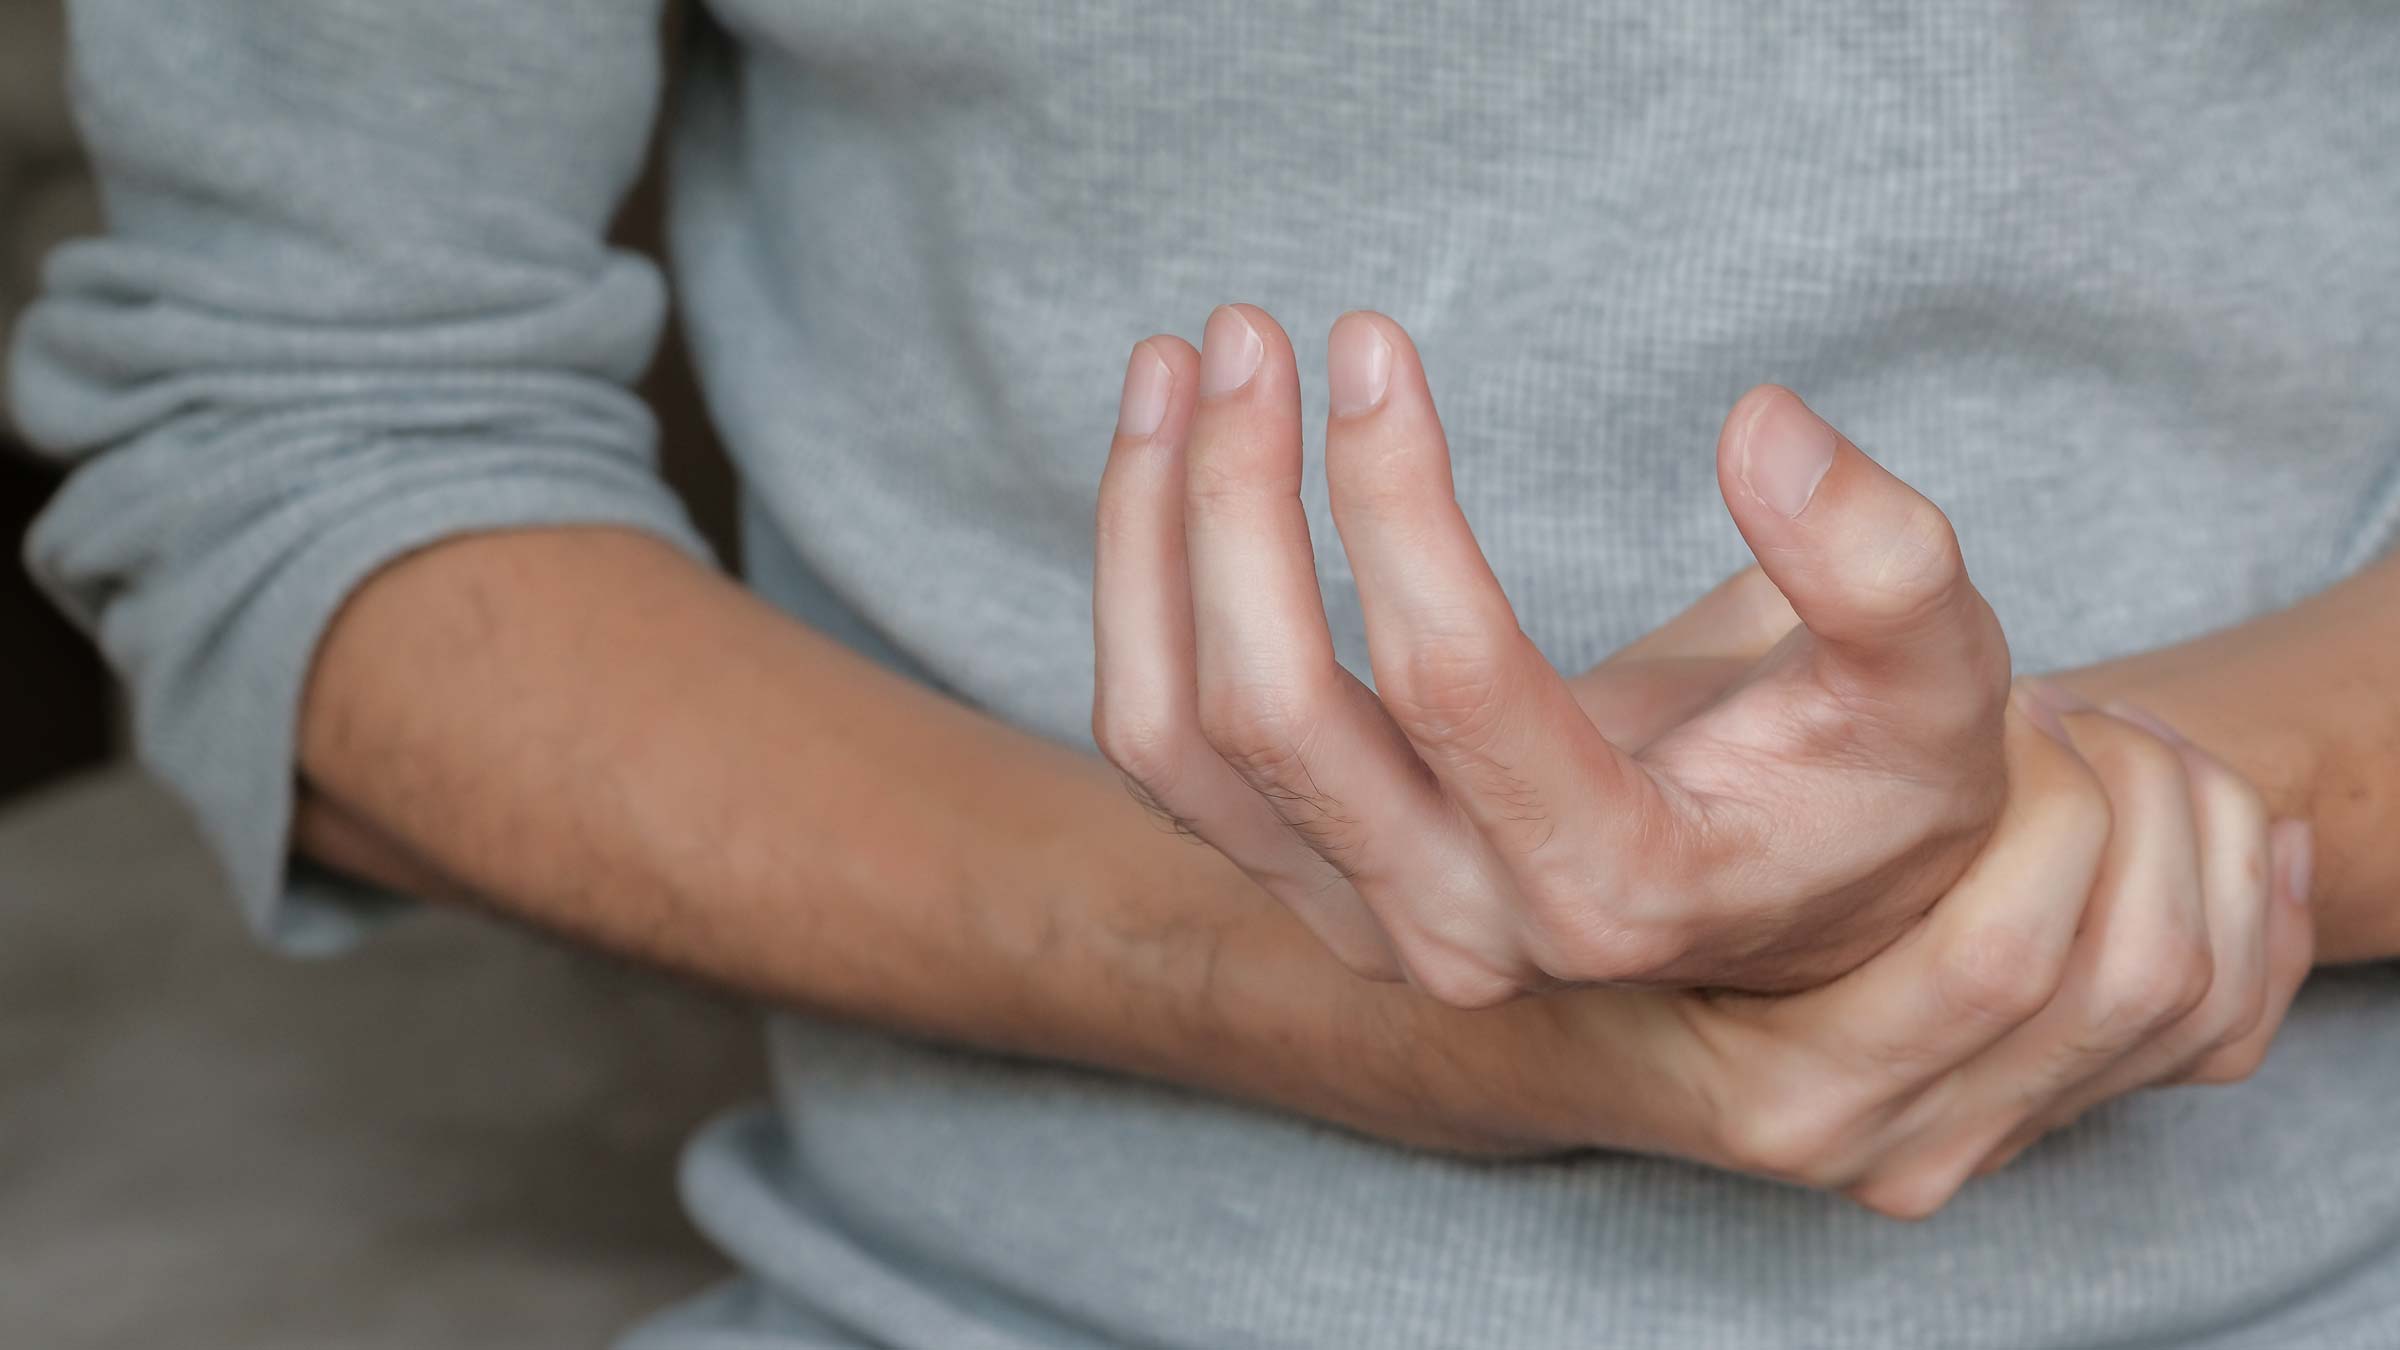 A person with an autoimmune disease clutching their hand